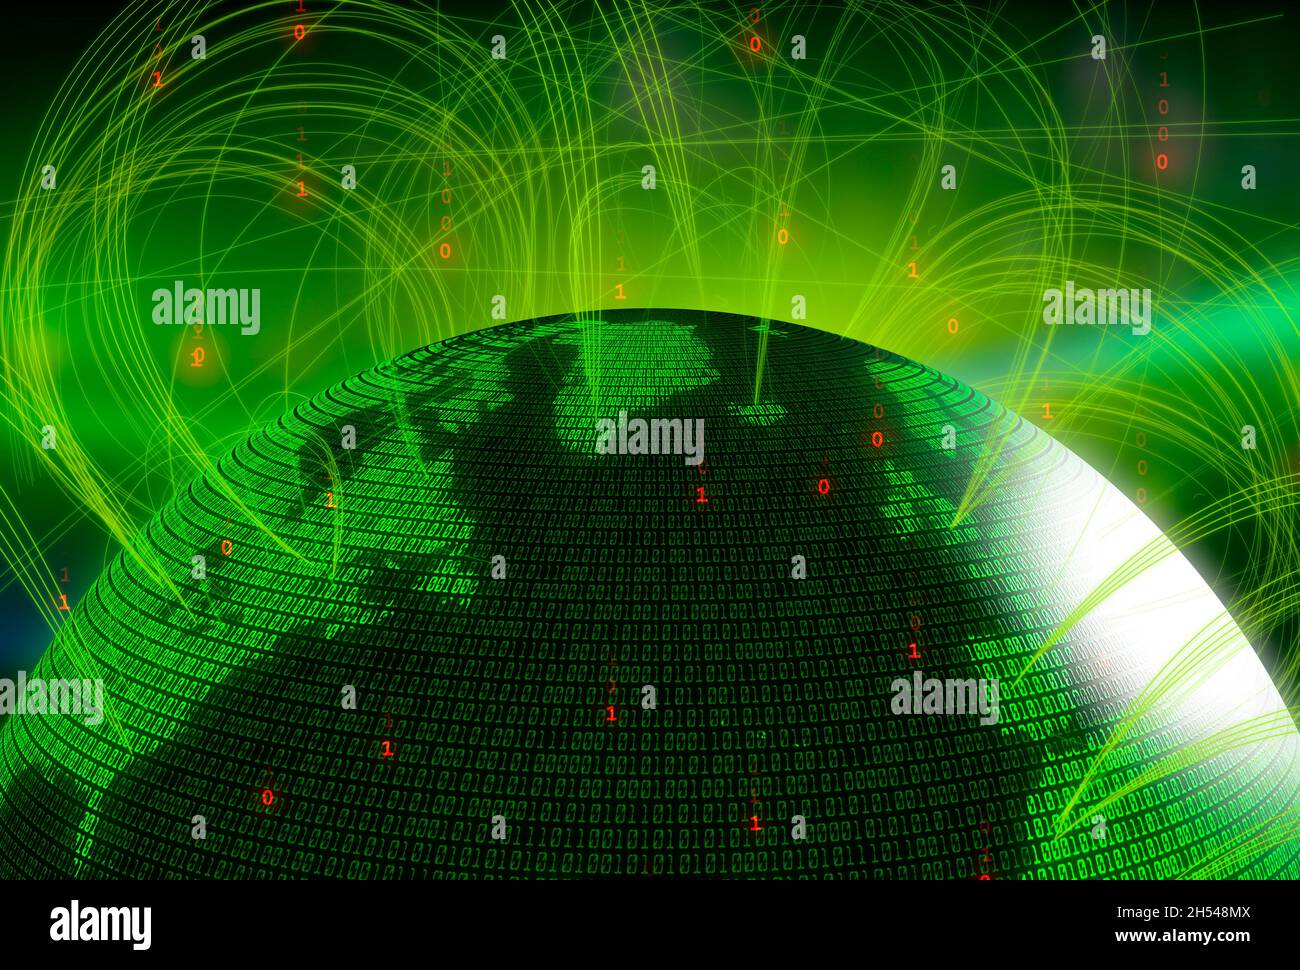 Global networks, illustration Stock Photo